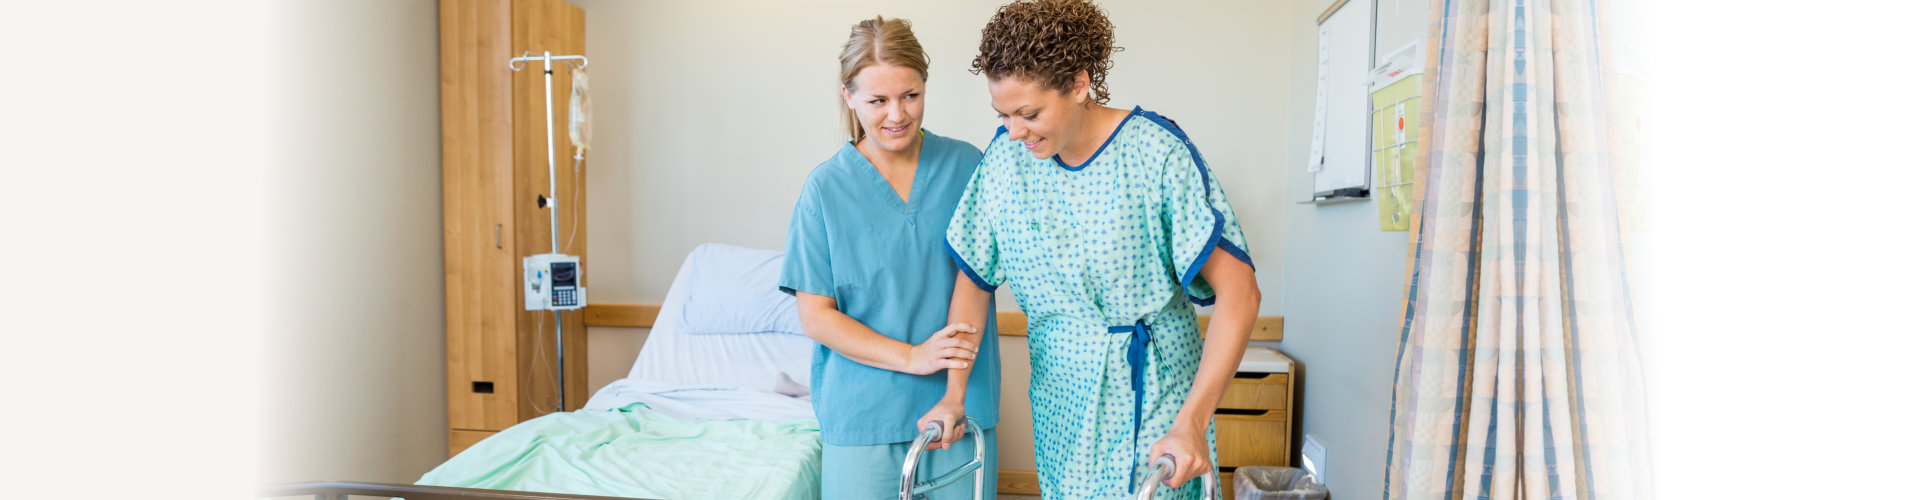 nurse assisting woman in walking